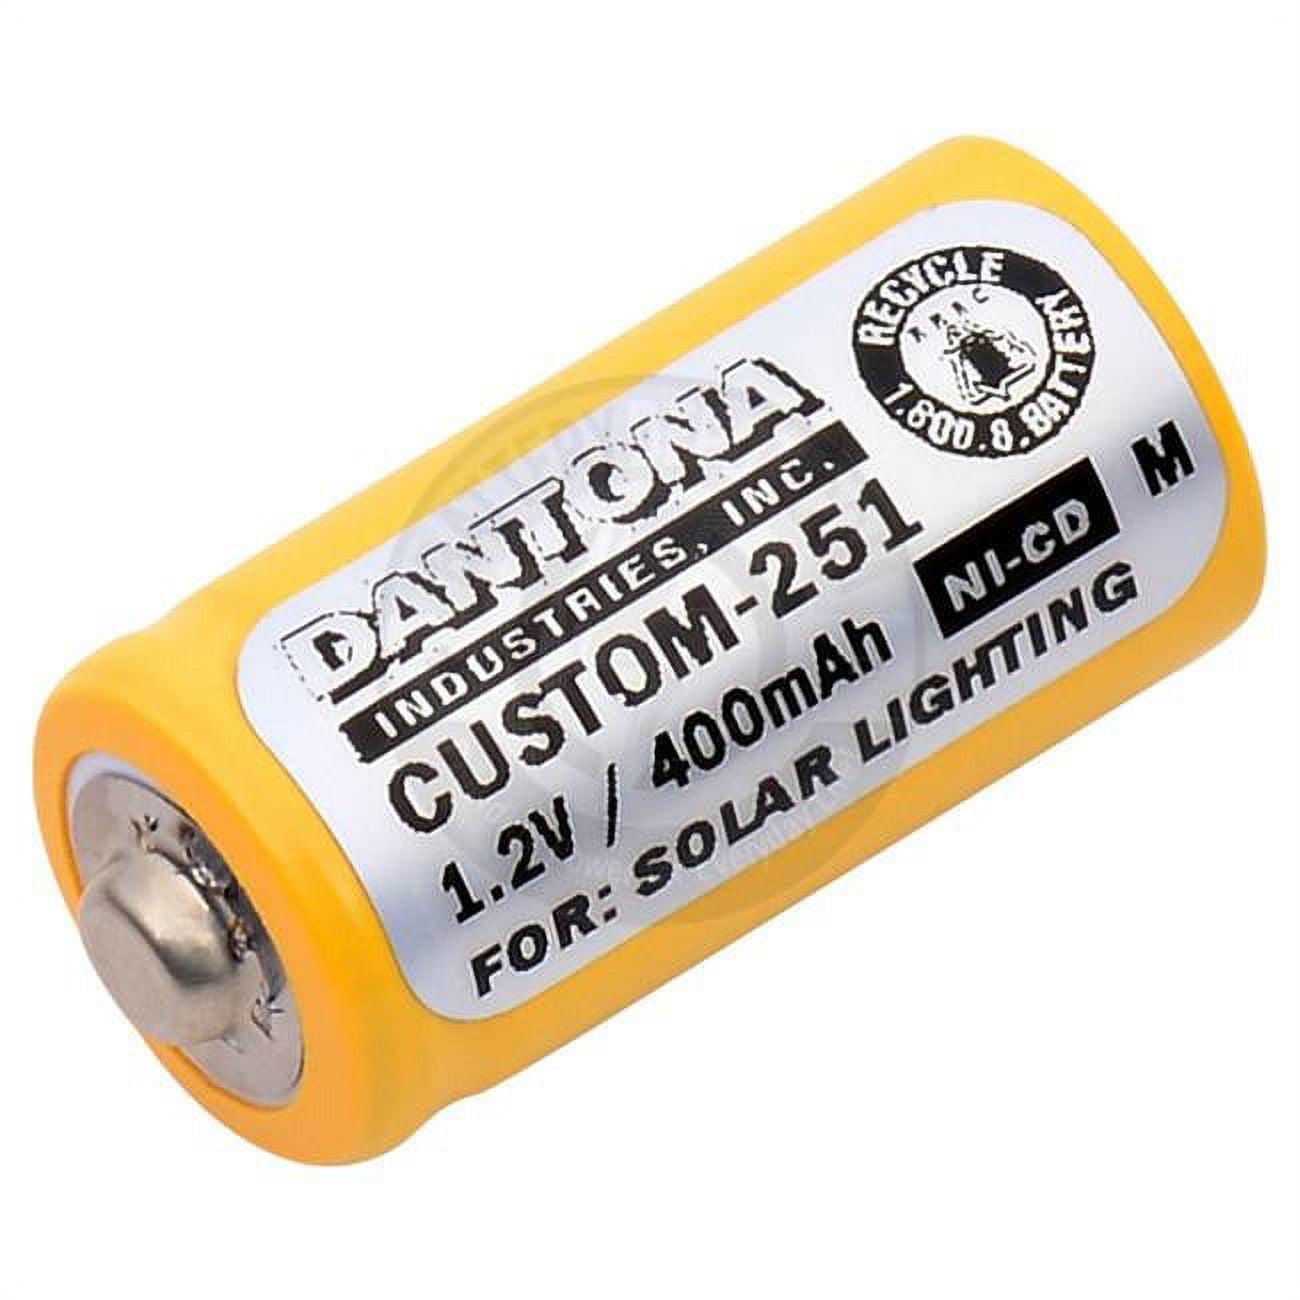 Picture of Dantona CUSTOM-251 Solar Light Replacement Emergency Battery